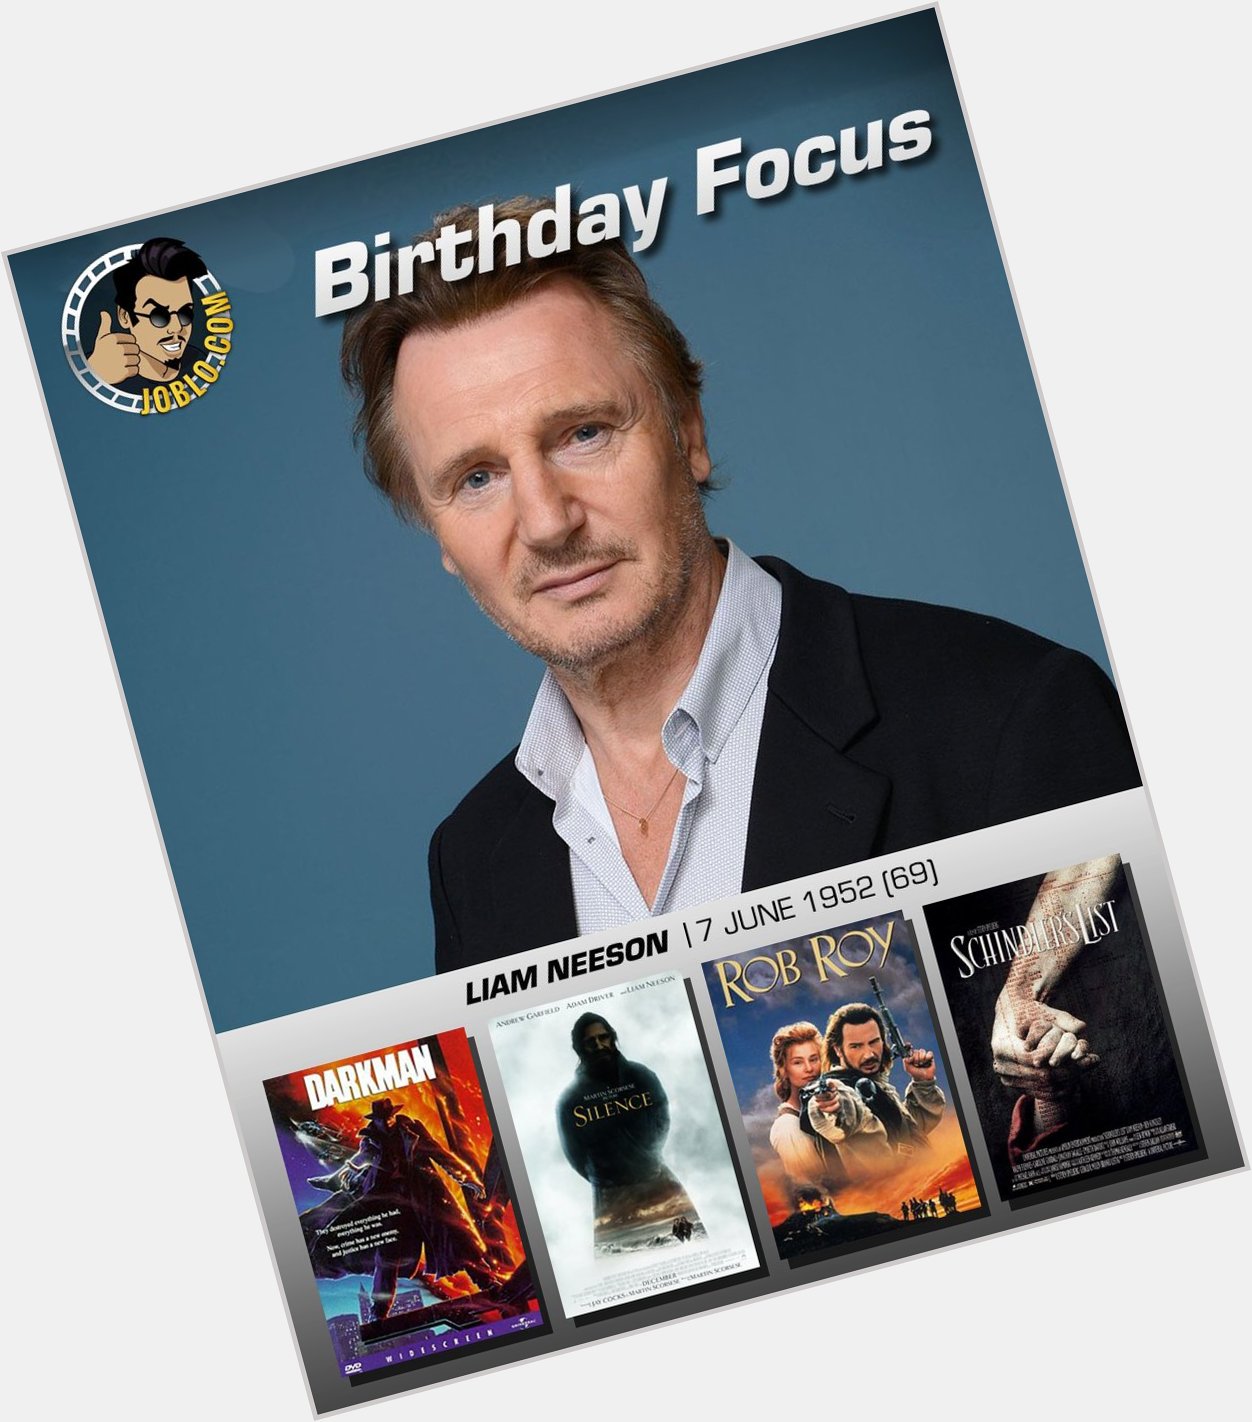 Wishing a very happy 69th birthday to Liam Neeson! 